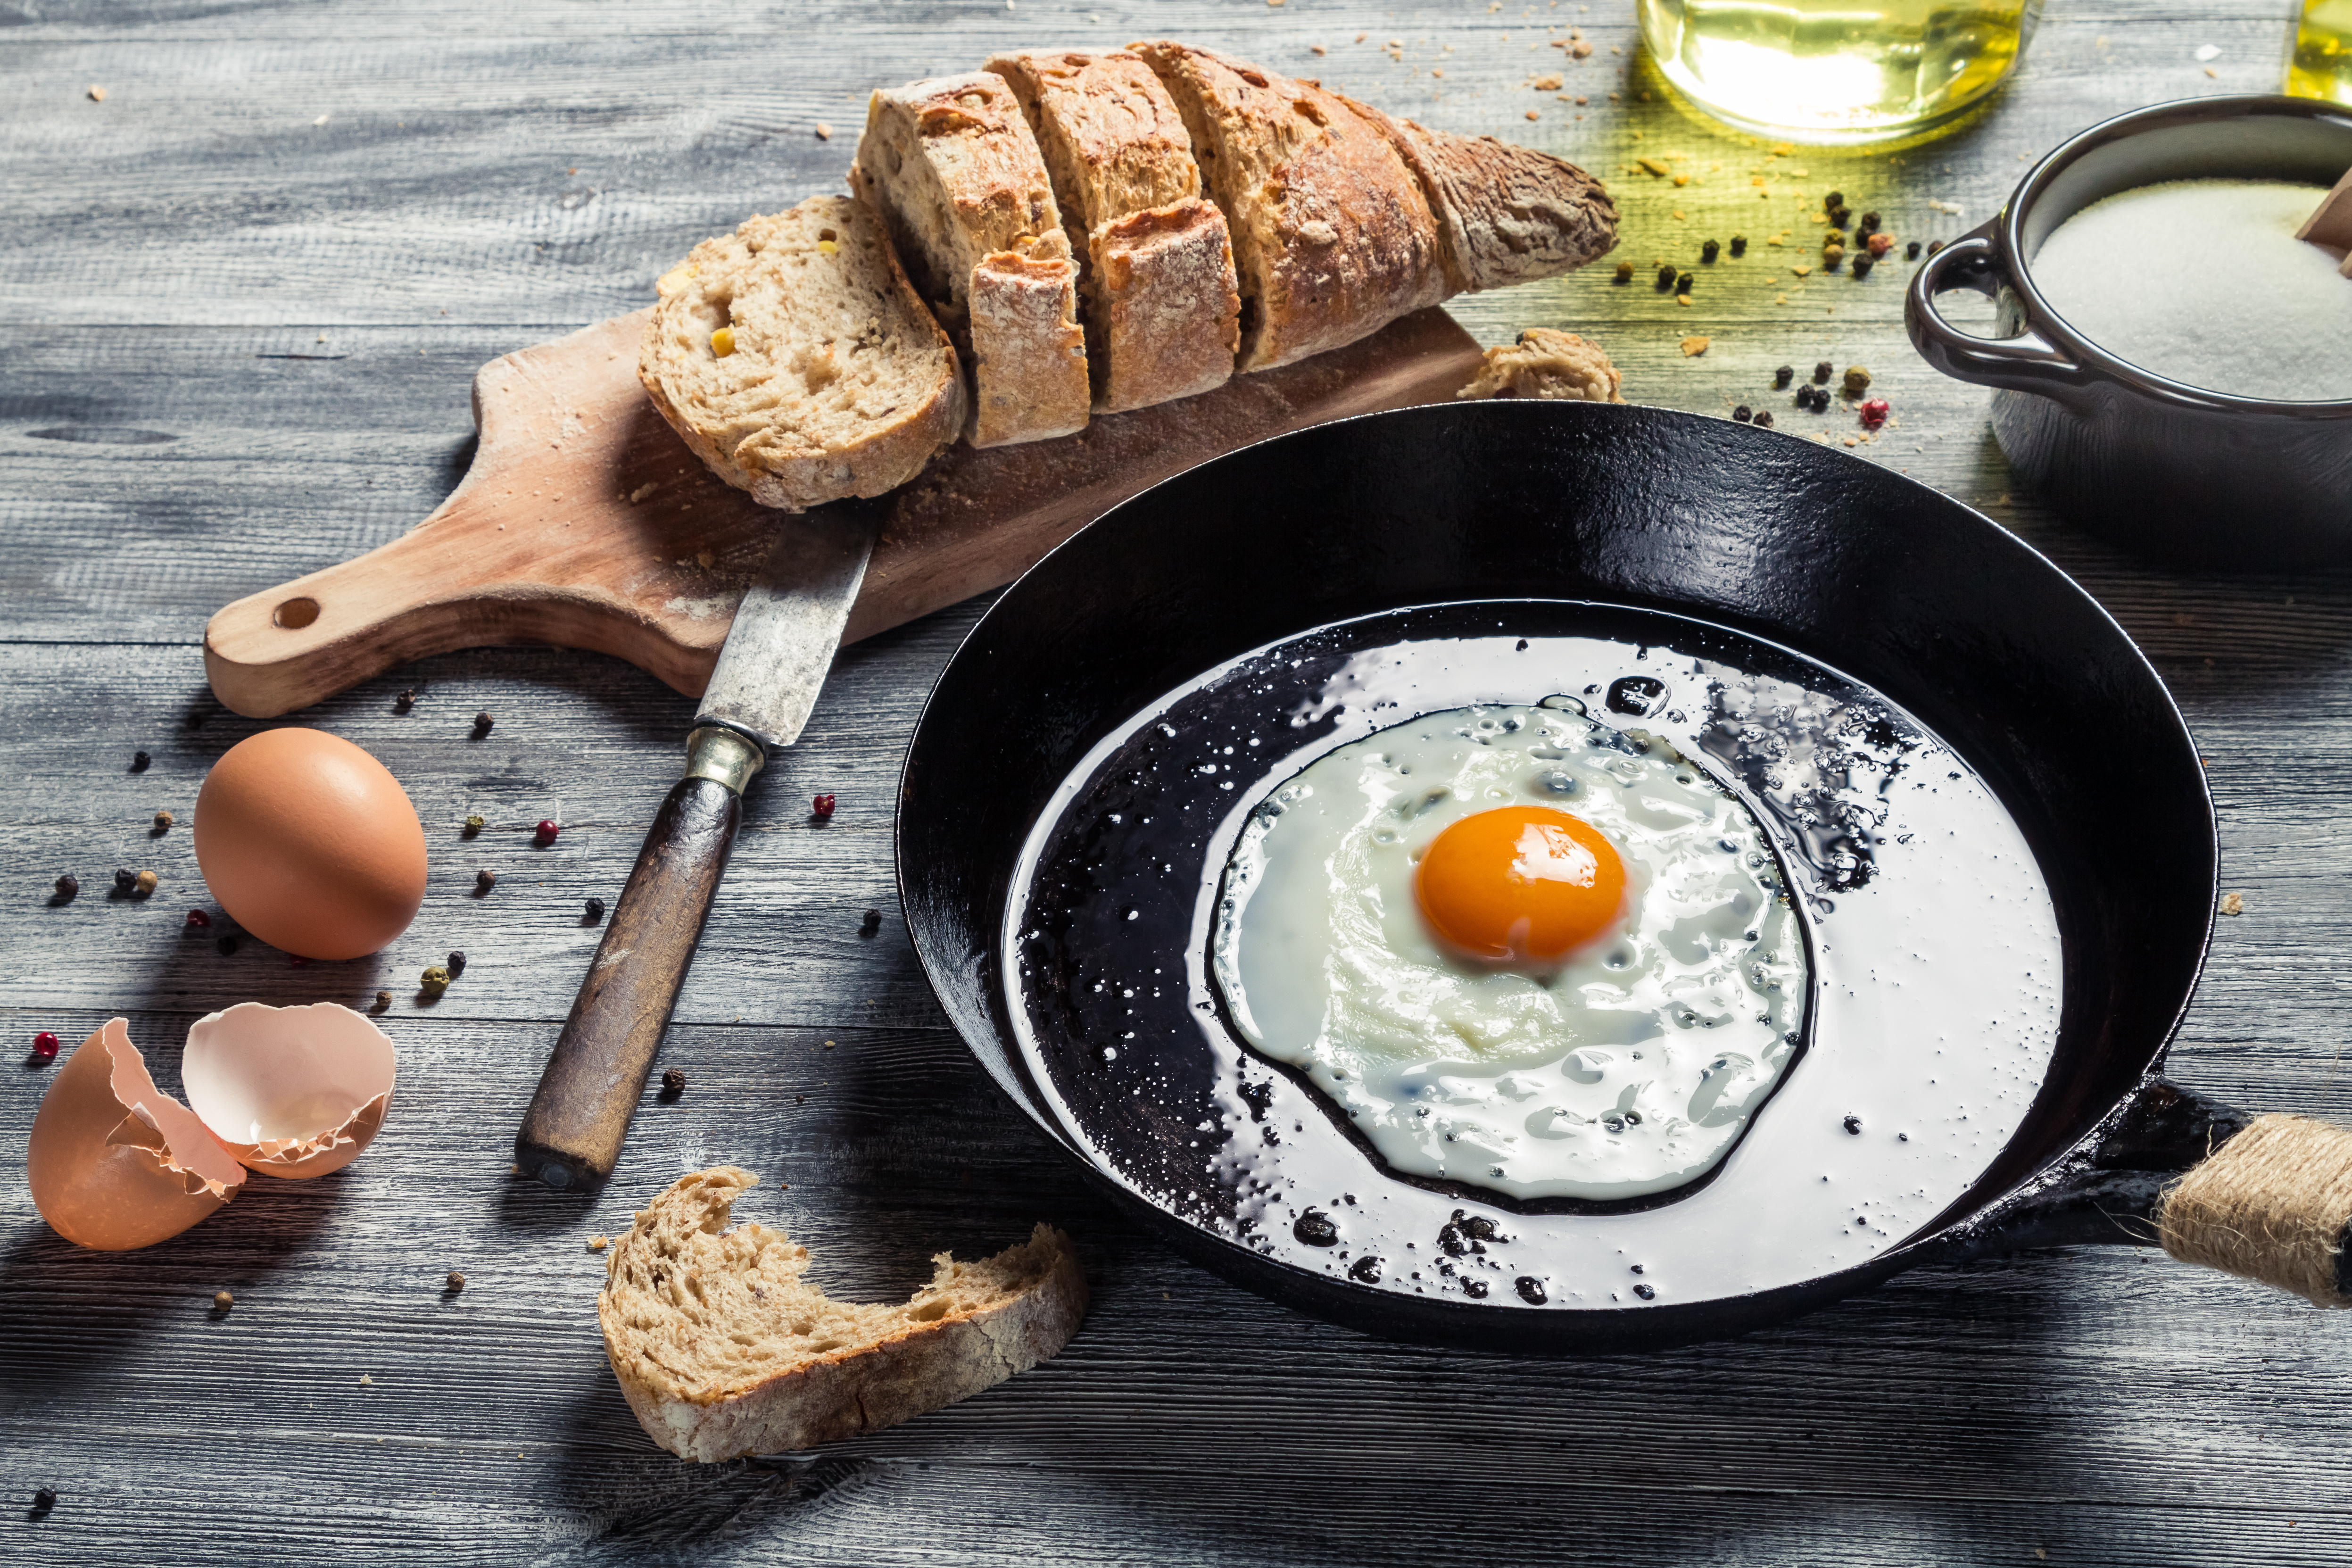 Food Egg HD Wallpaper | Background Image